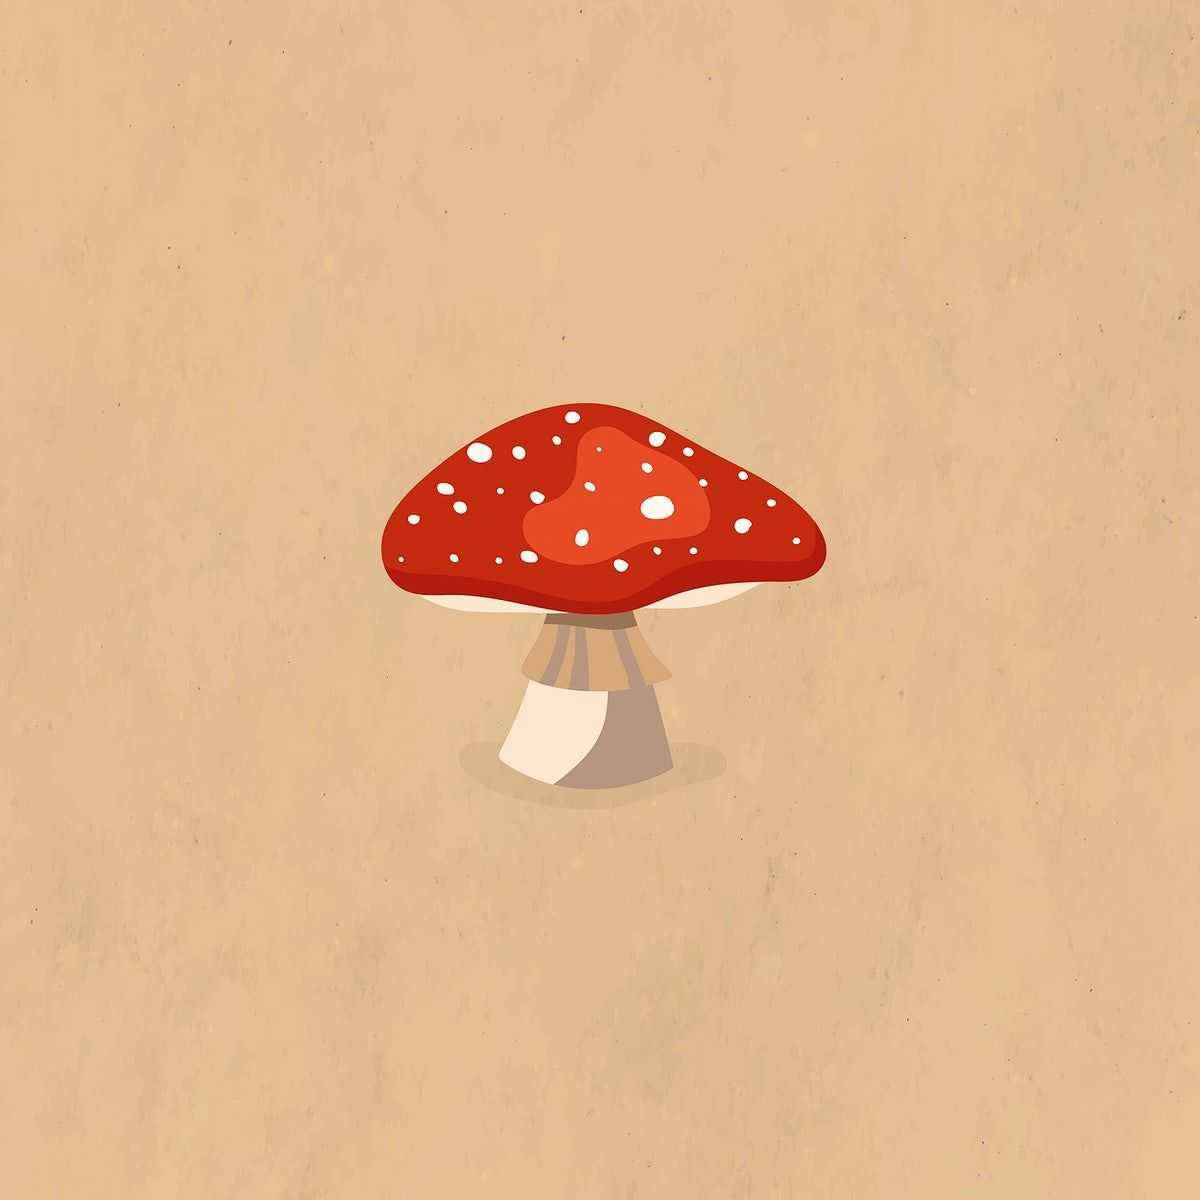 Red Cap Mushroom Aesthetic Background